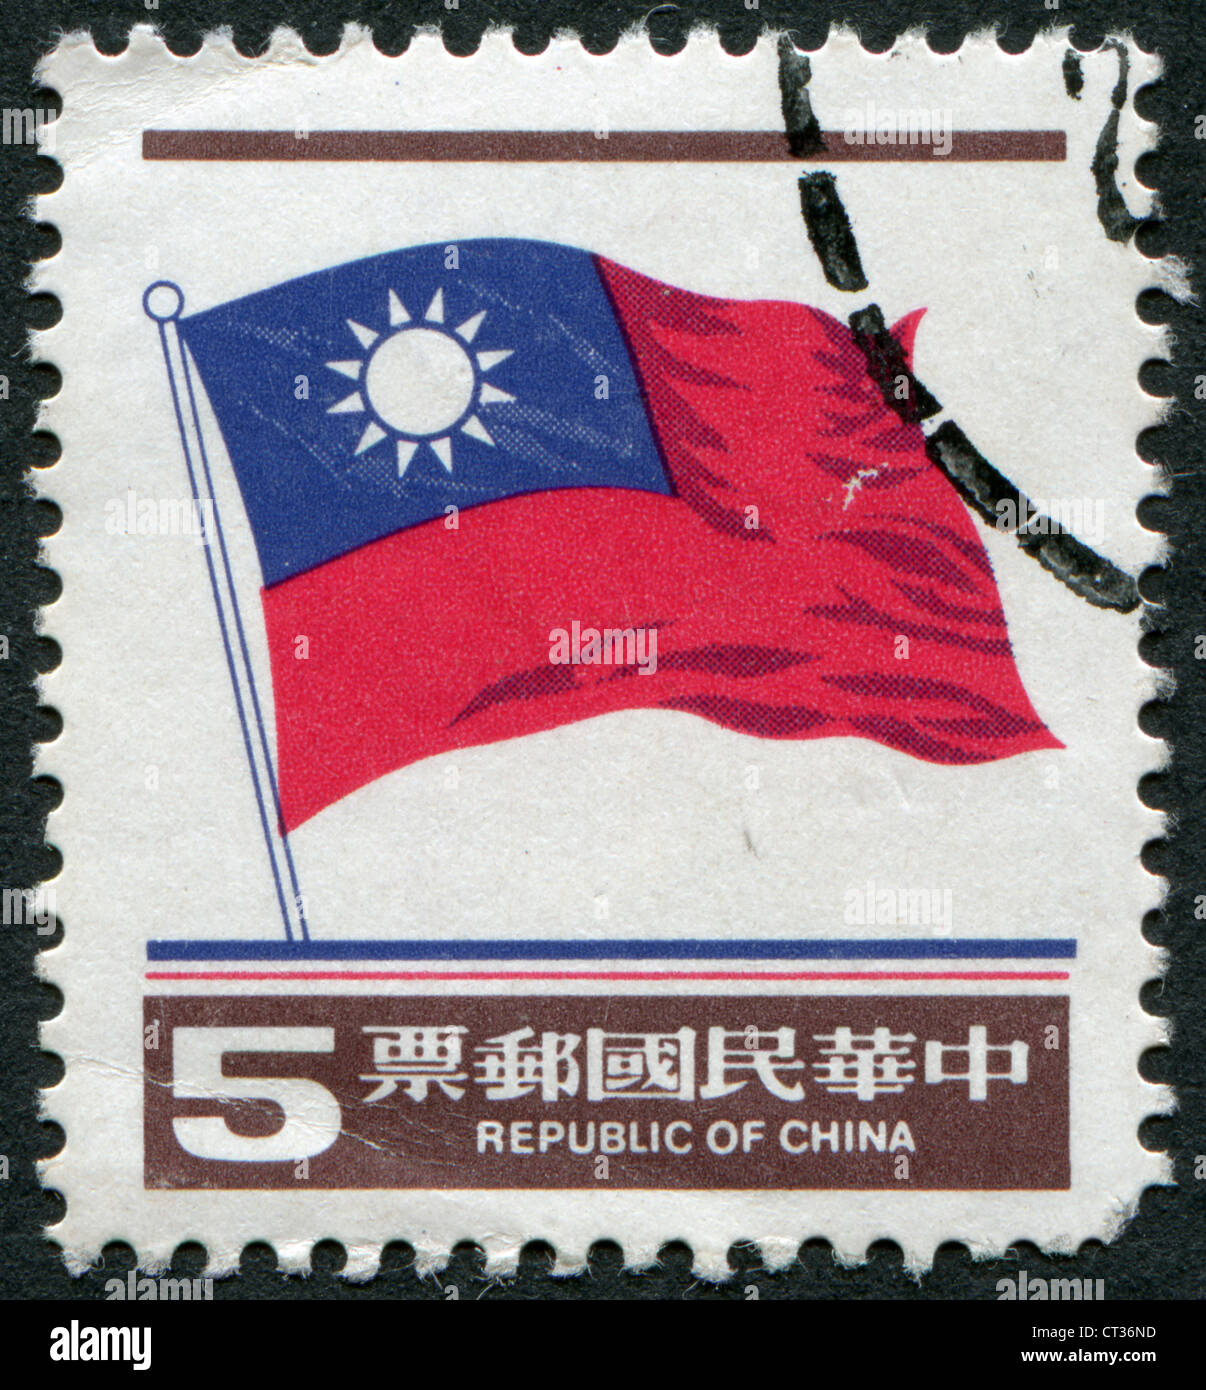 photo date stamp 1980